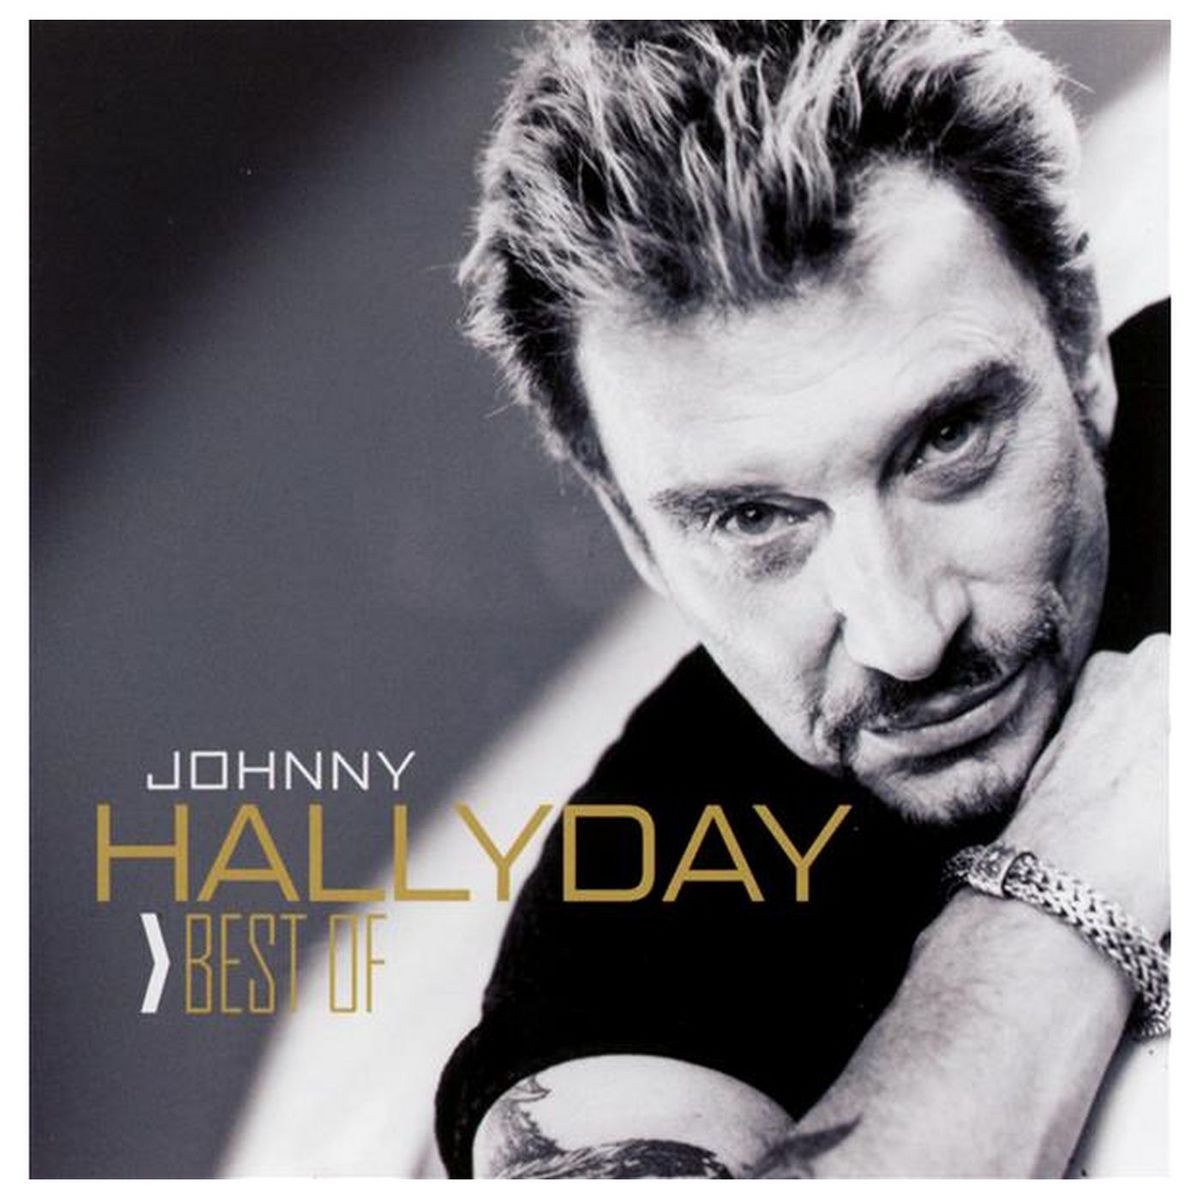 Johnny Hallyday - Best of CD